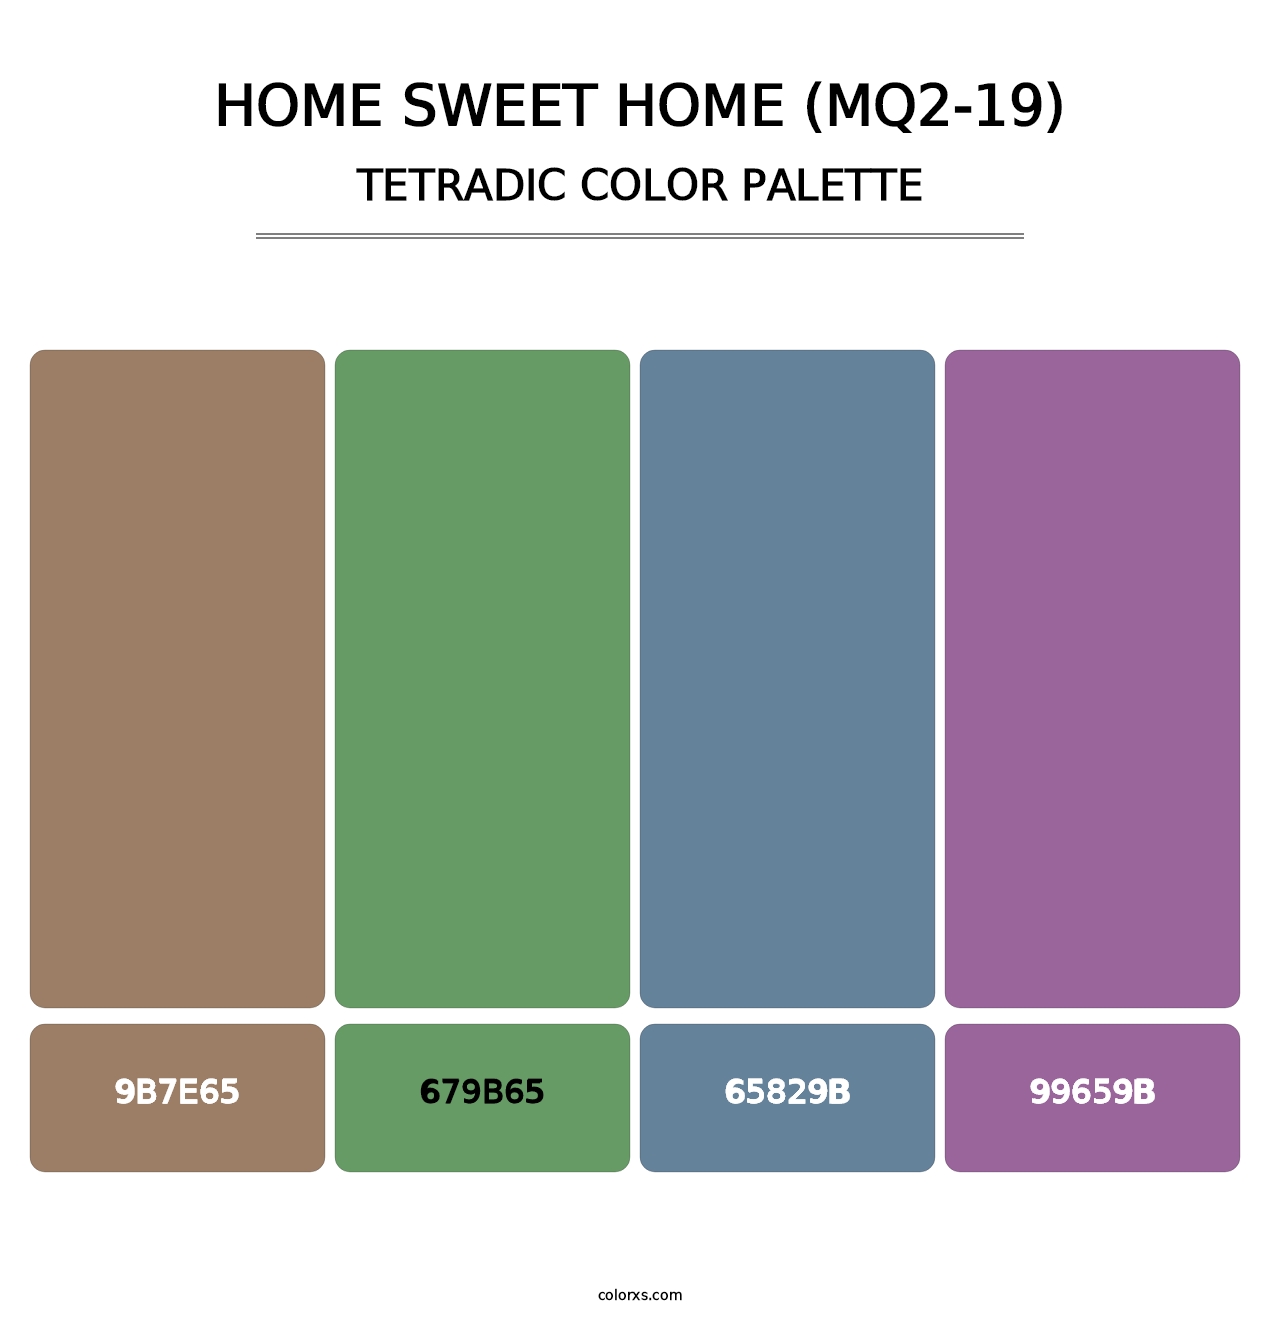 Home Sweet Home (MQ2-19) - Tetradic Color Palette